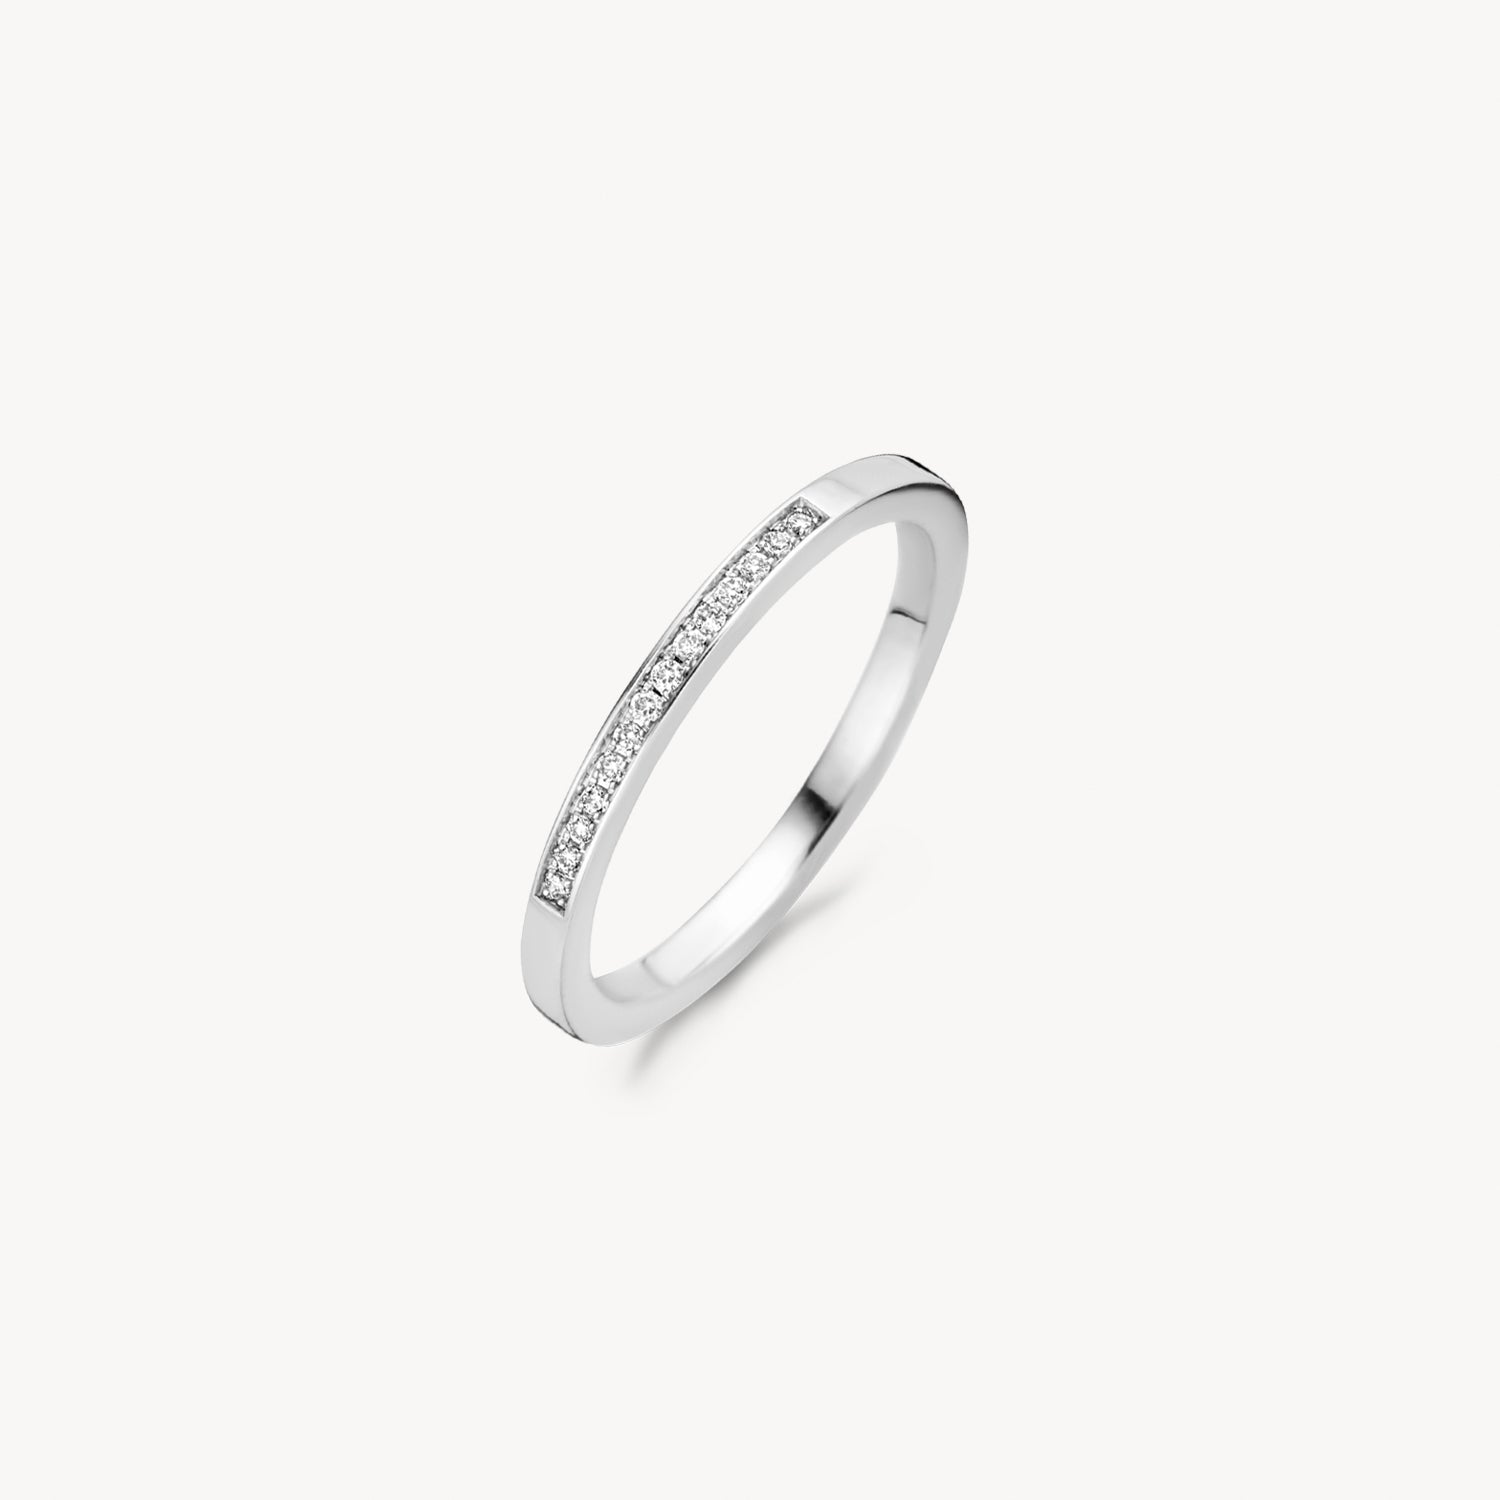 Ring 1630WDI - 14k White gold with diamond